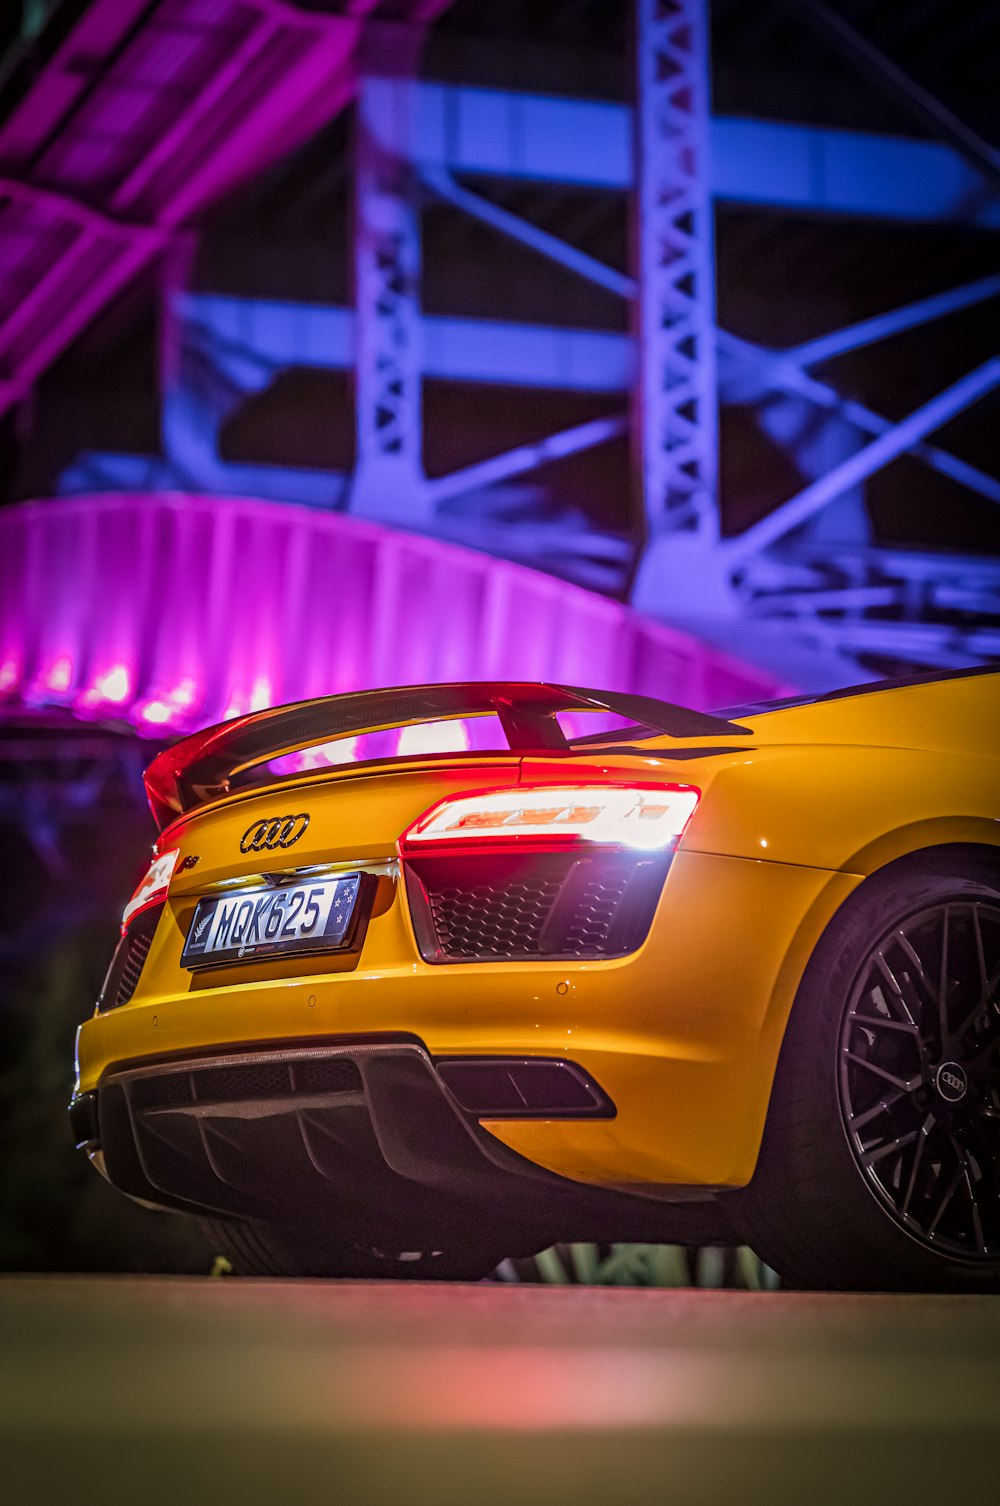 500+ Audi R8 Pictures | Download Free Images on Unsplash